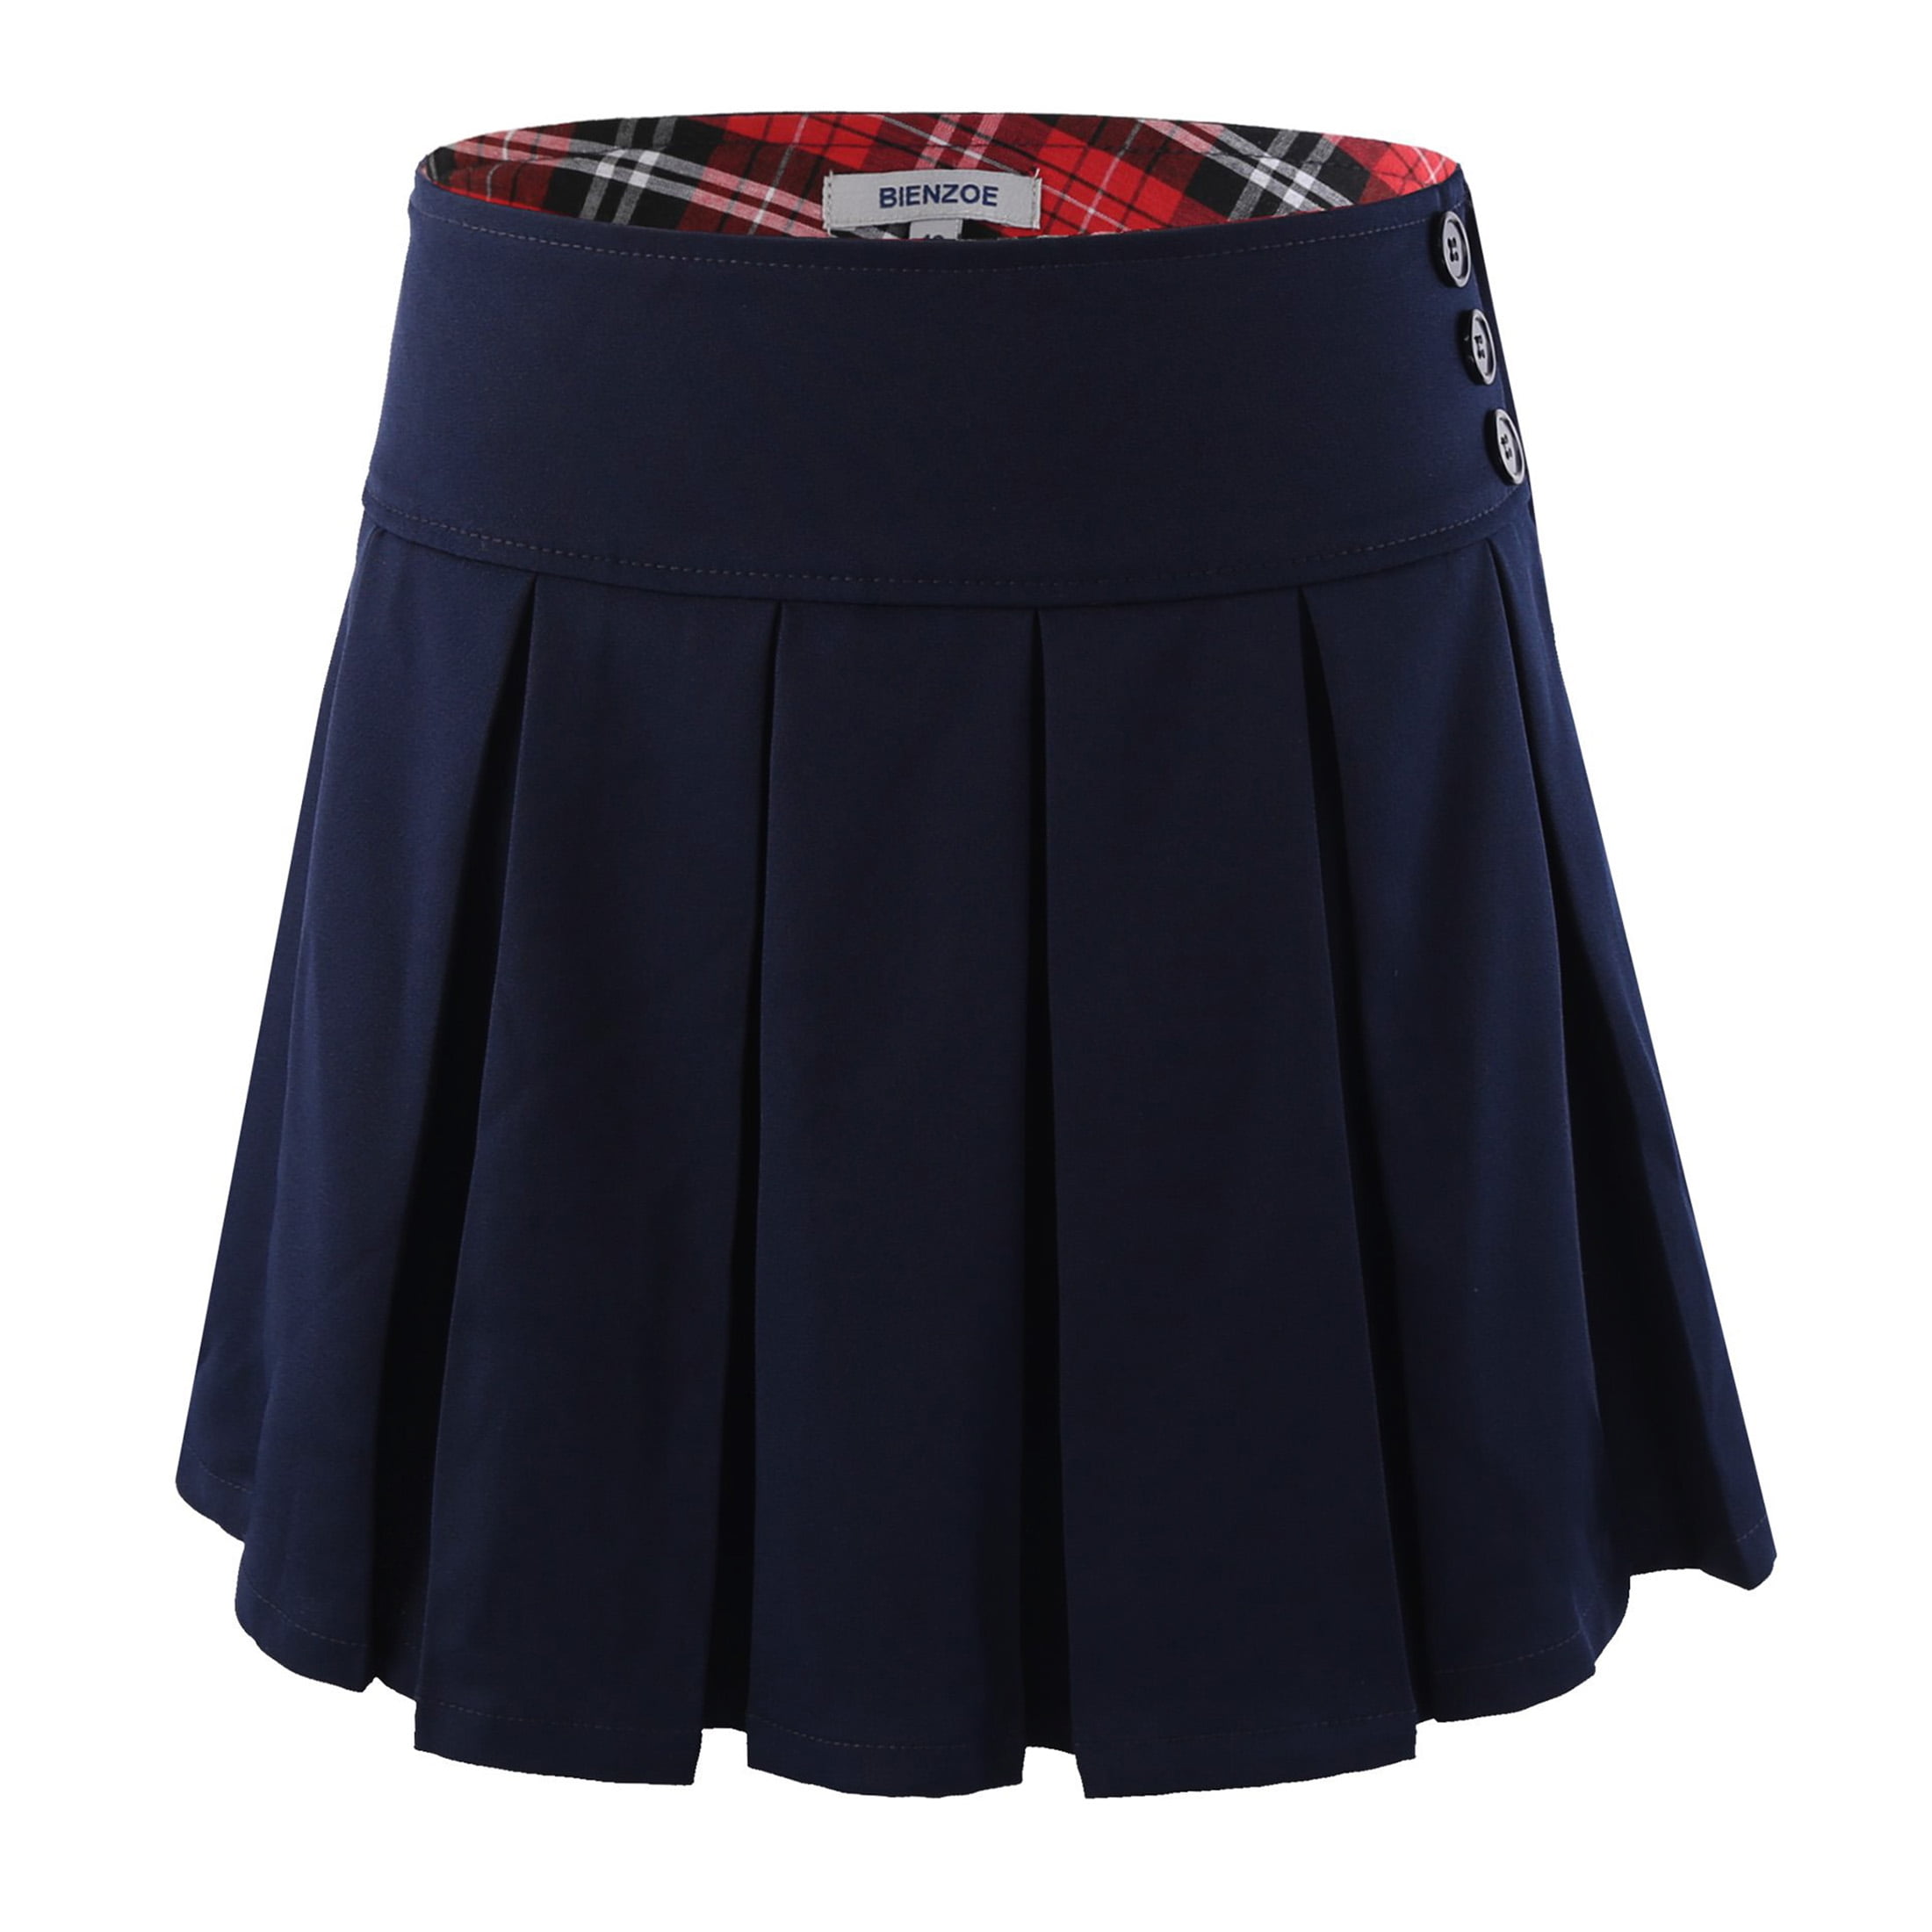 Ages 4-12 BHS Girls School Skirt Adjustable Waist Black Grey Pleated 